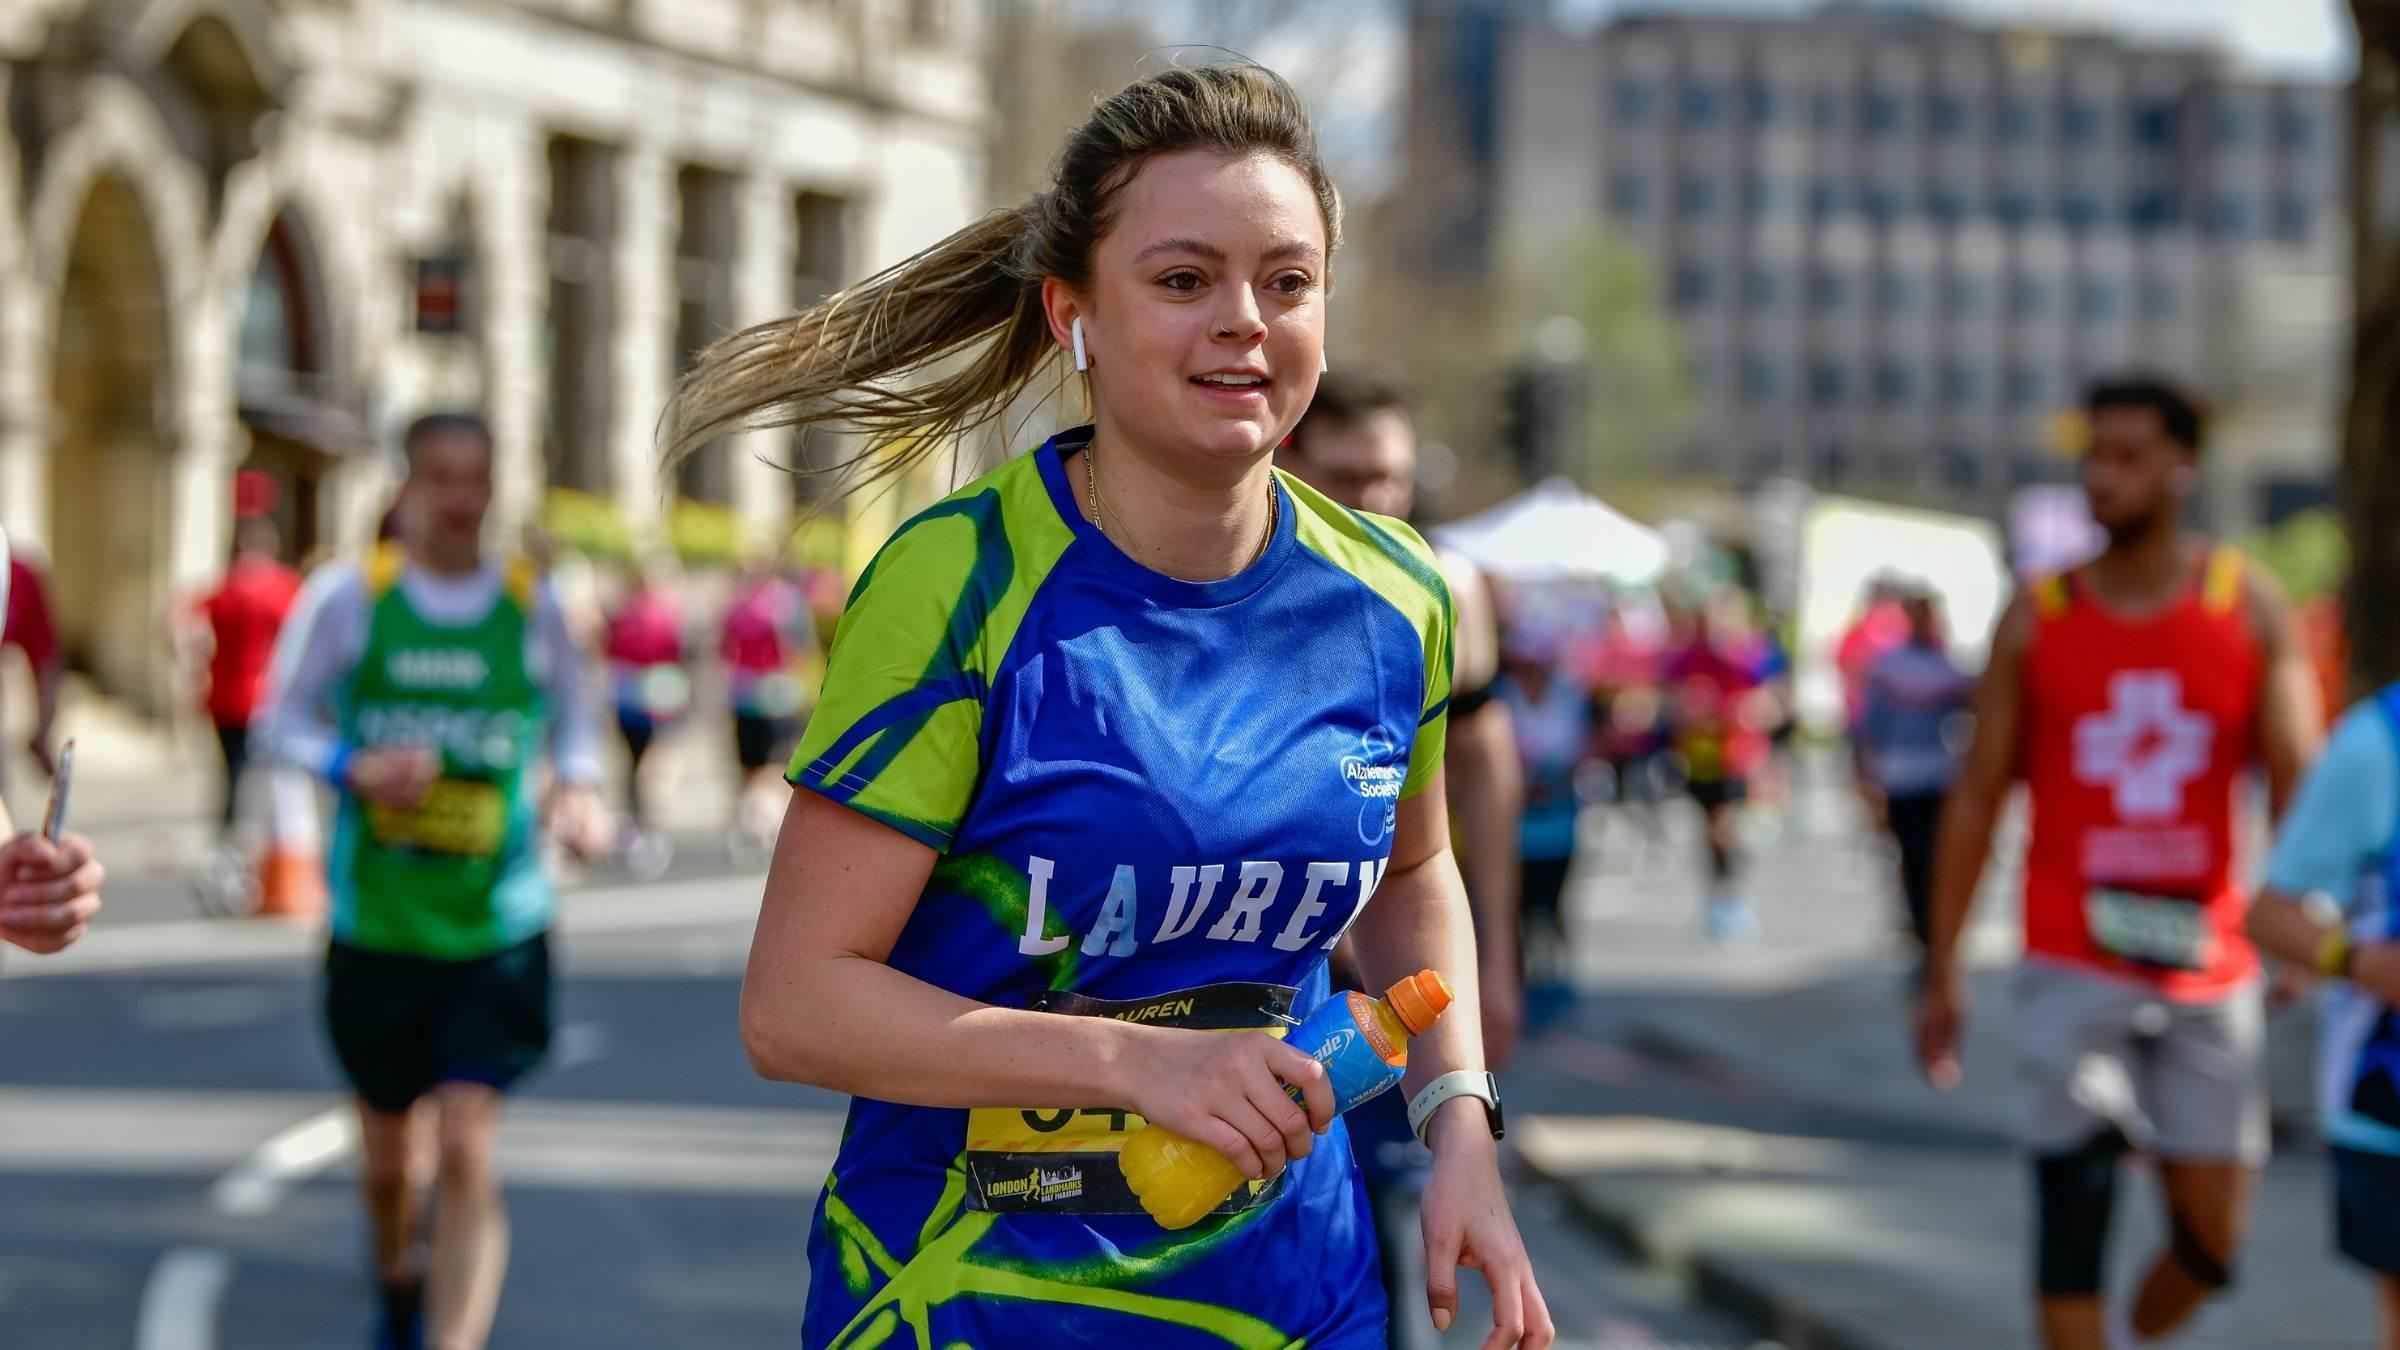 Woman running at London Landmarks Half Marathon 2022